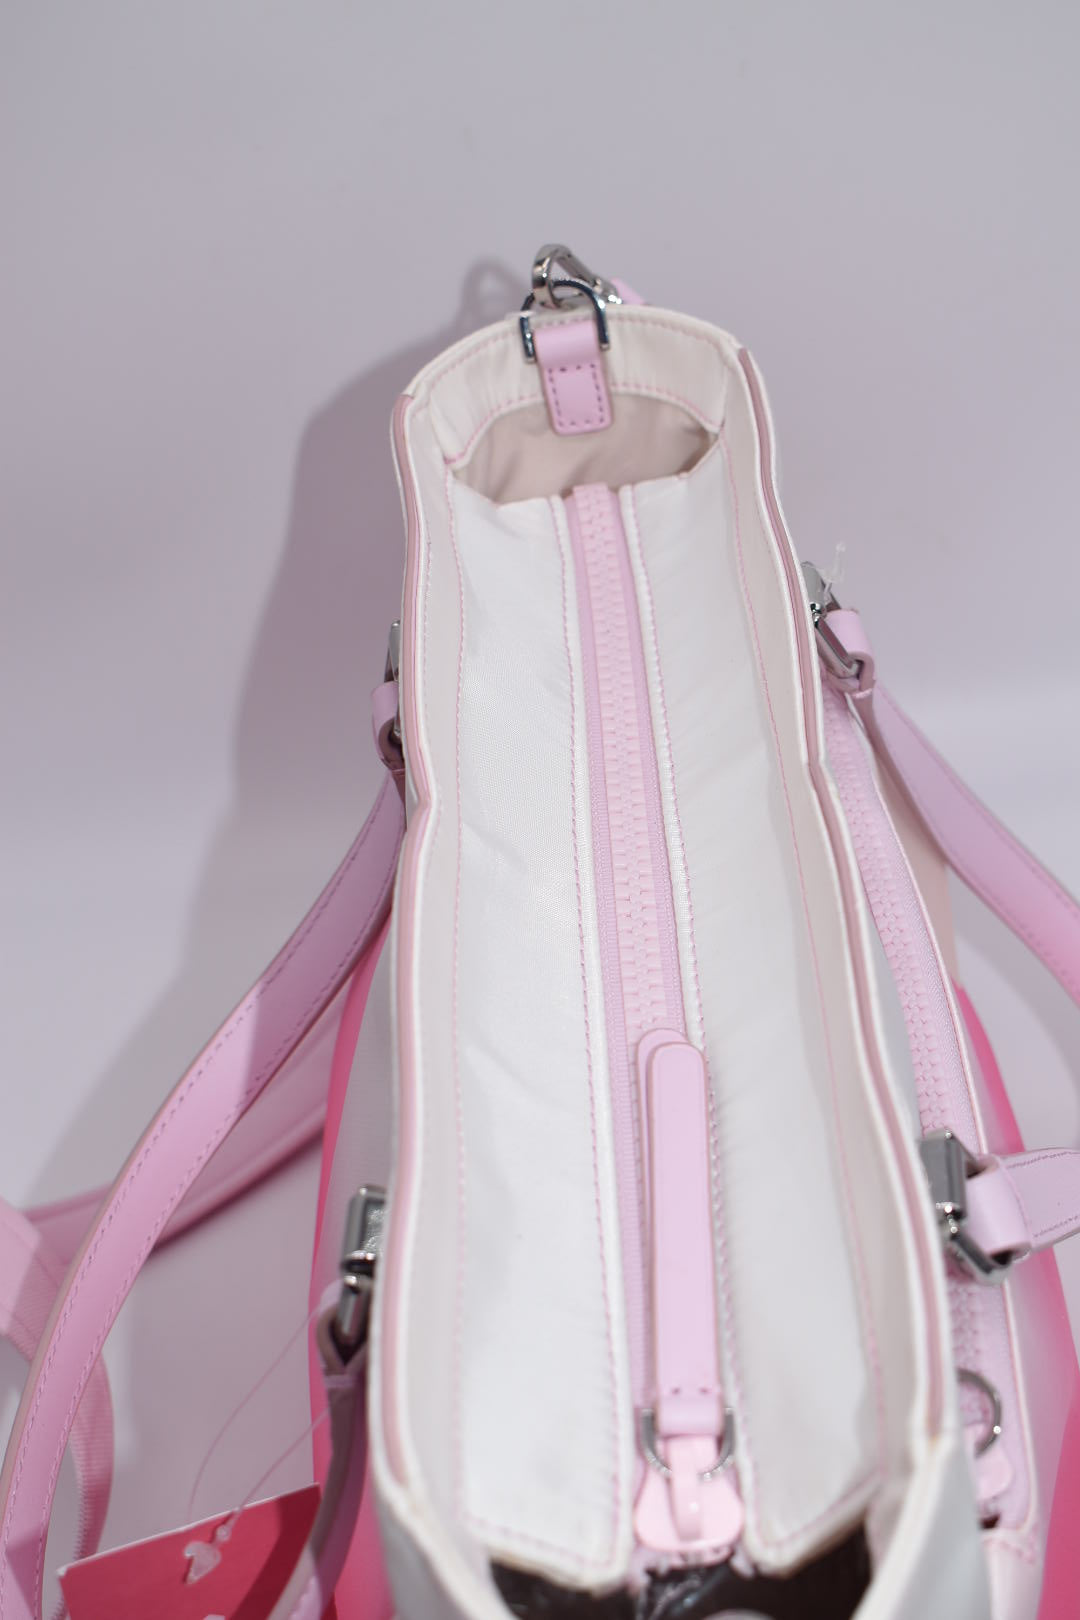 Kate Spade Jae Degrade Medium Satchel Bag in Radiant Pink